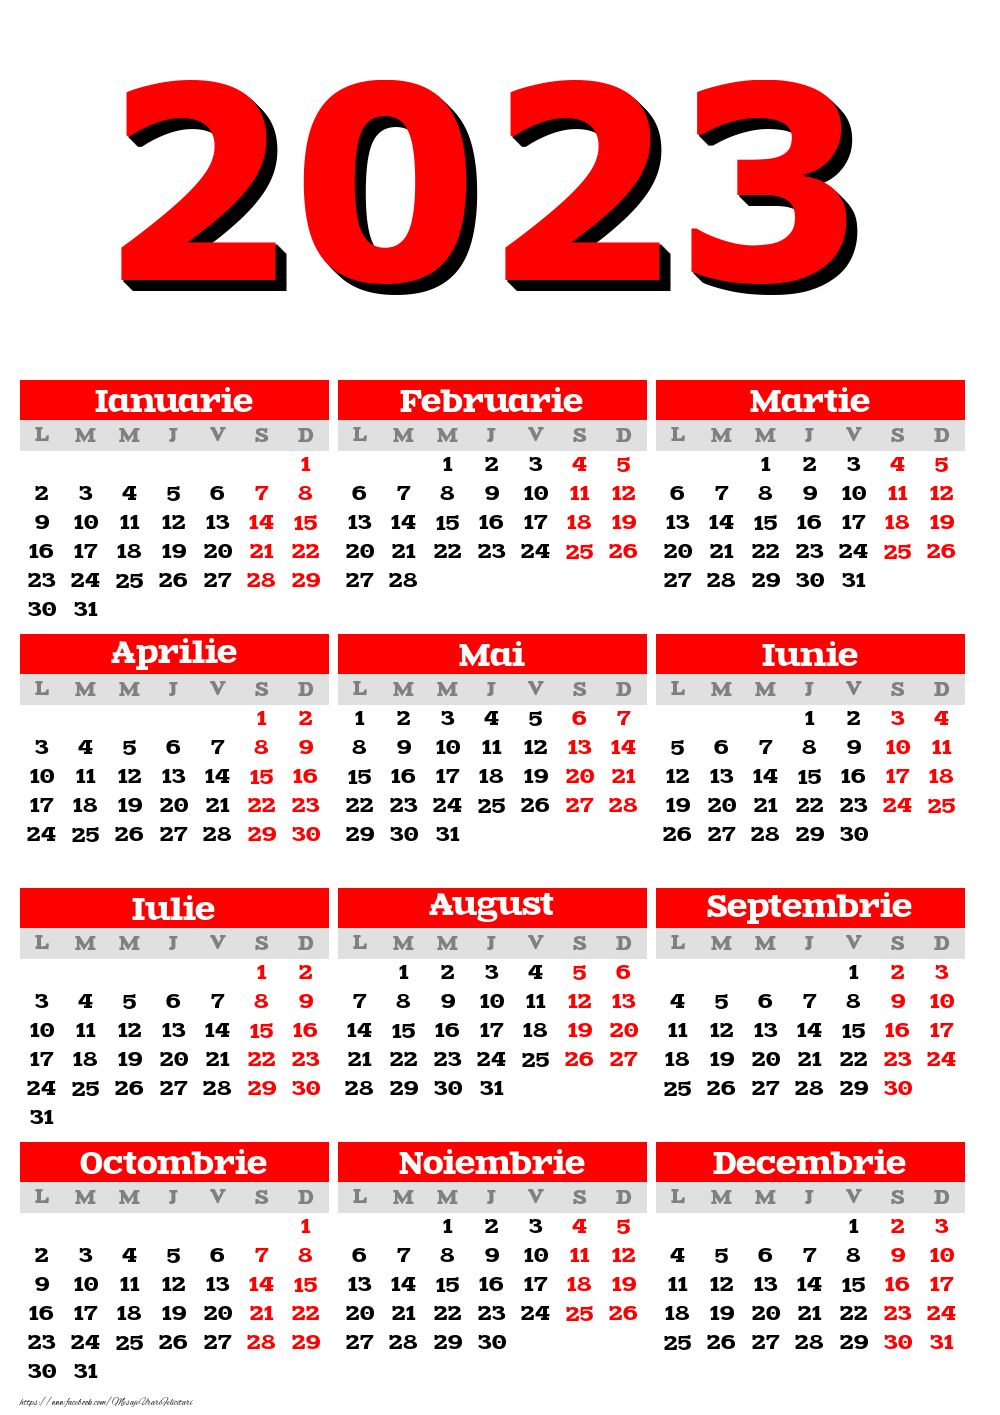 Imagini cu calendare - Calendar 2023 - Clasic Rosu - Model 0014 - mesajeurarifelicitari.com